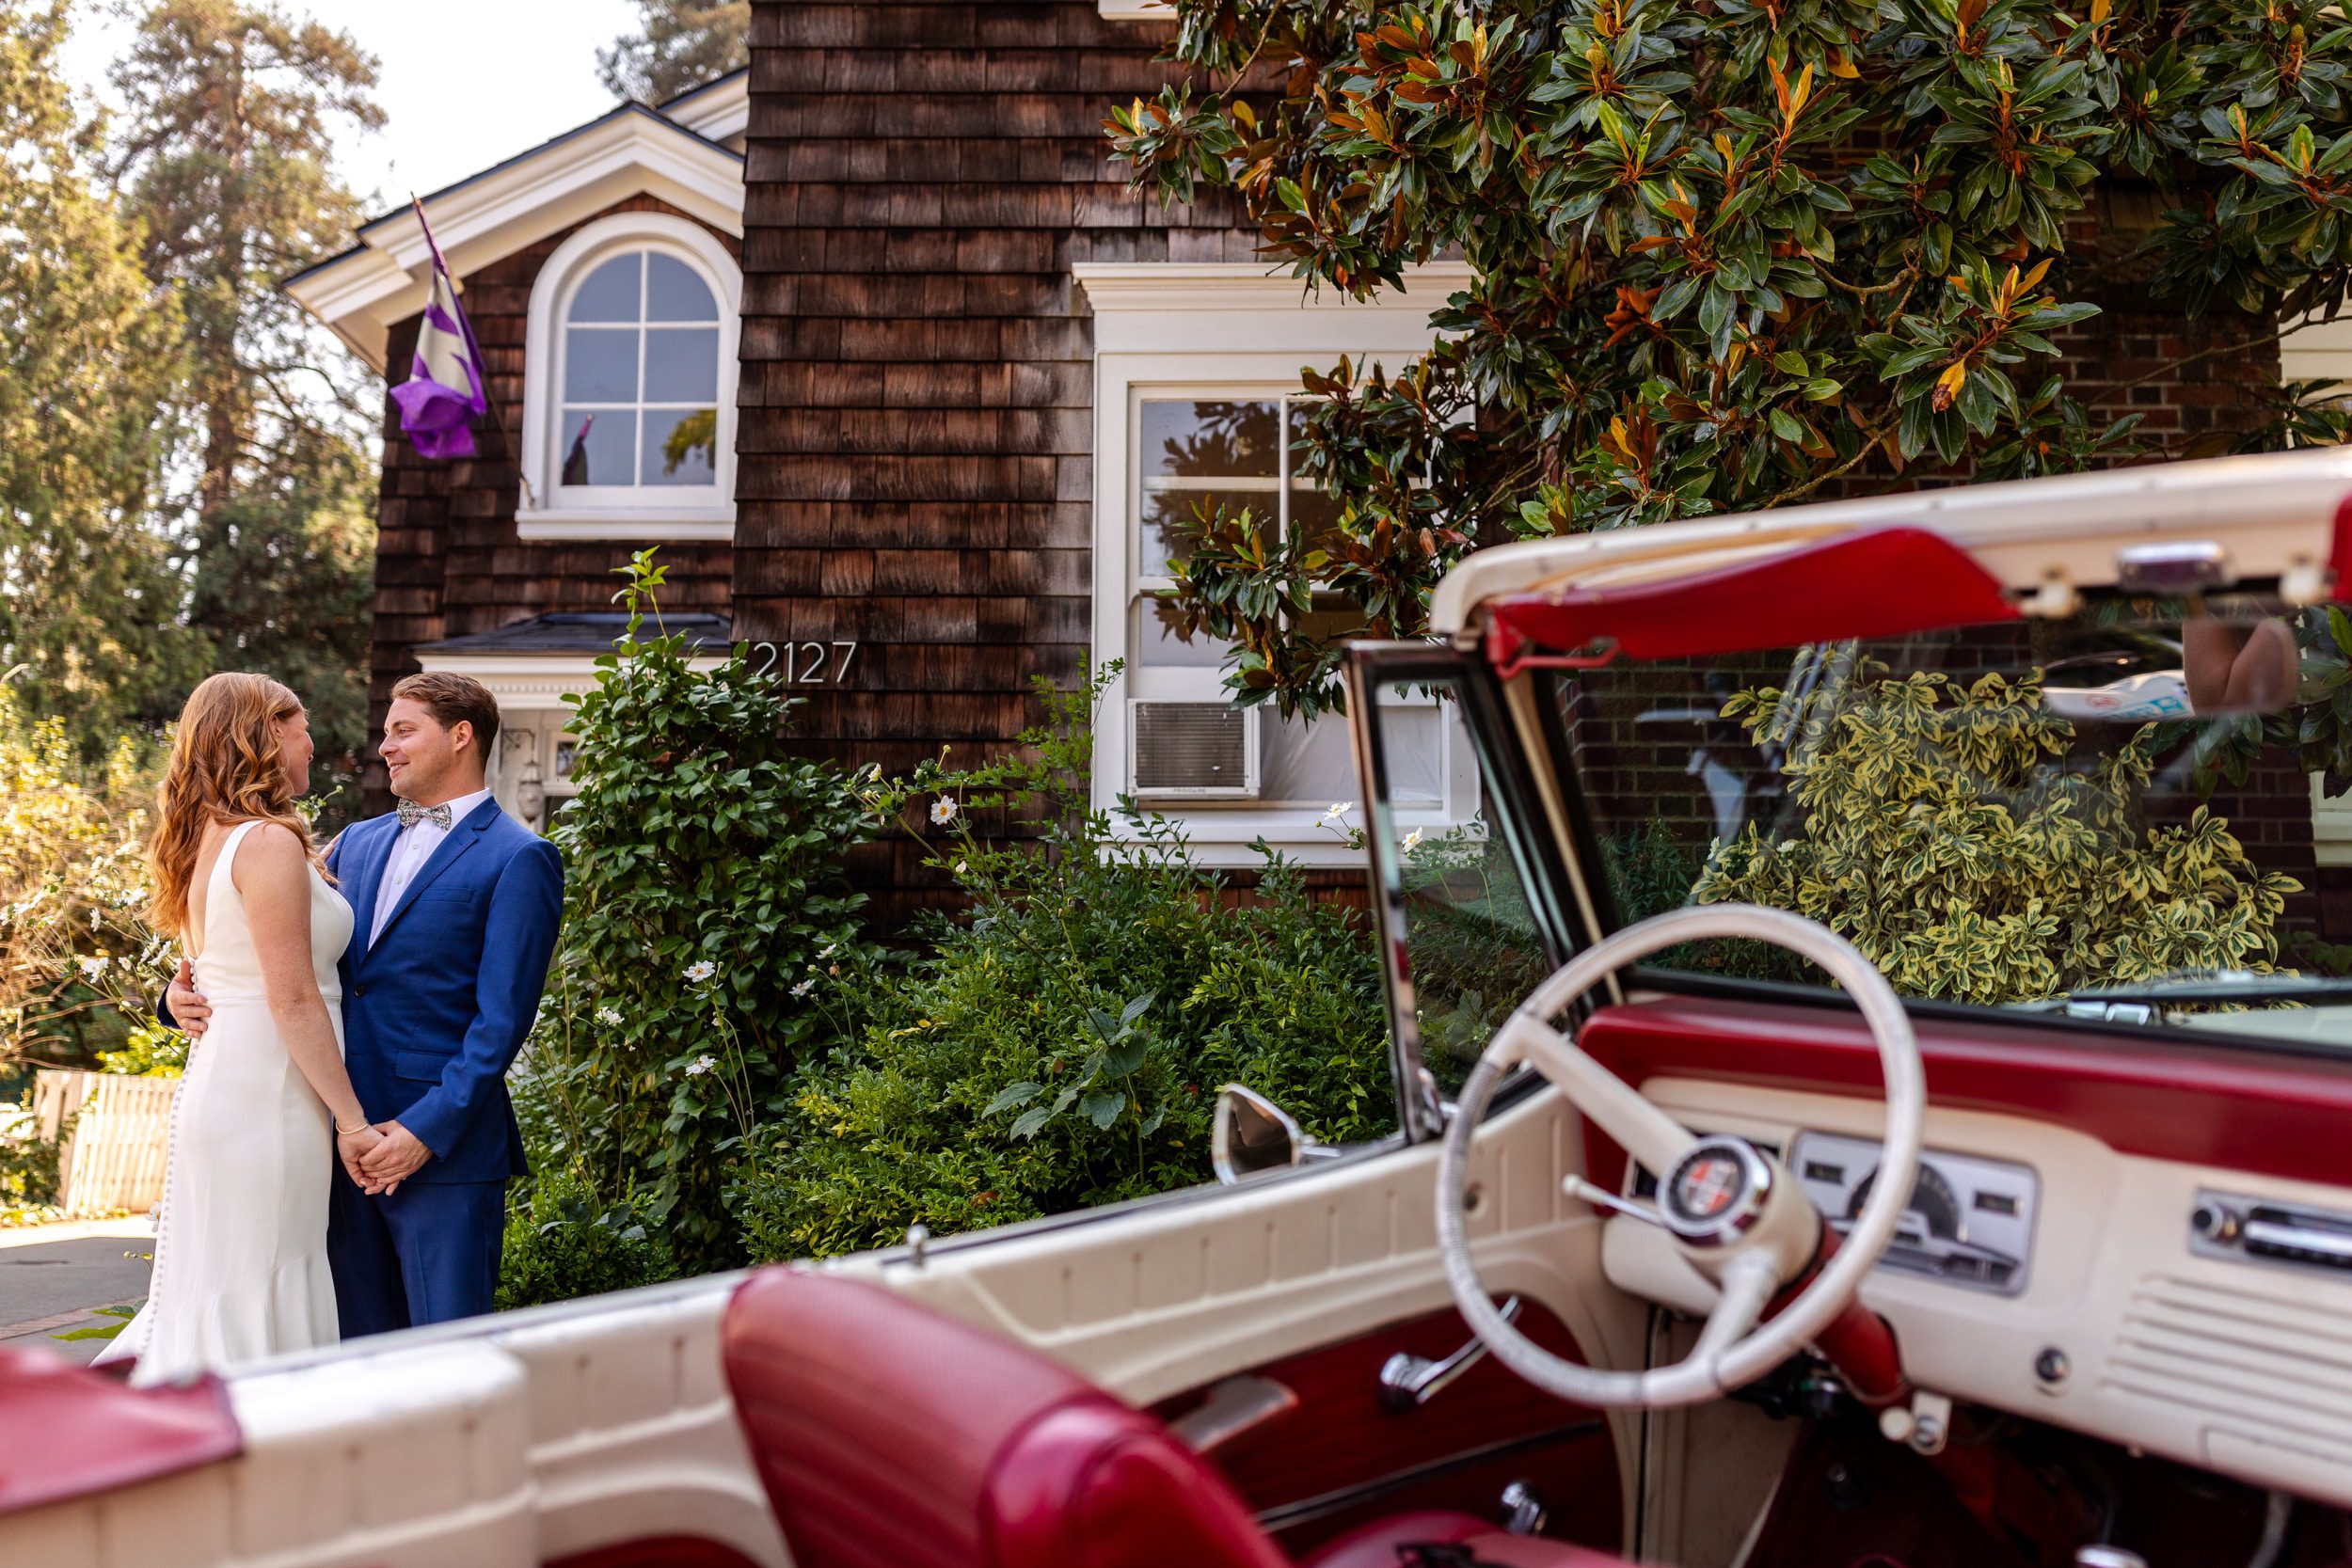 bride and groom with old car, old car wedding photos, get away car wedding